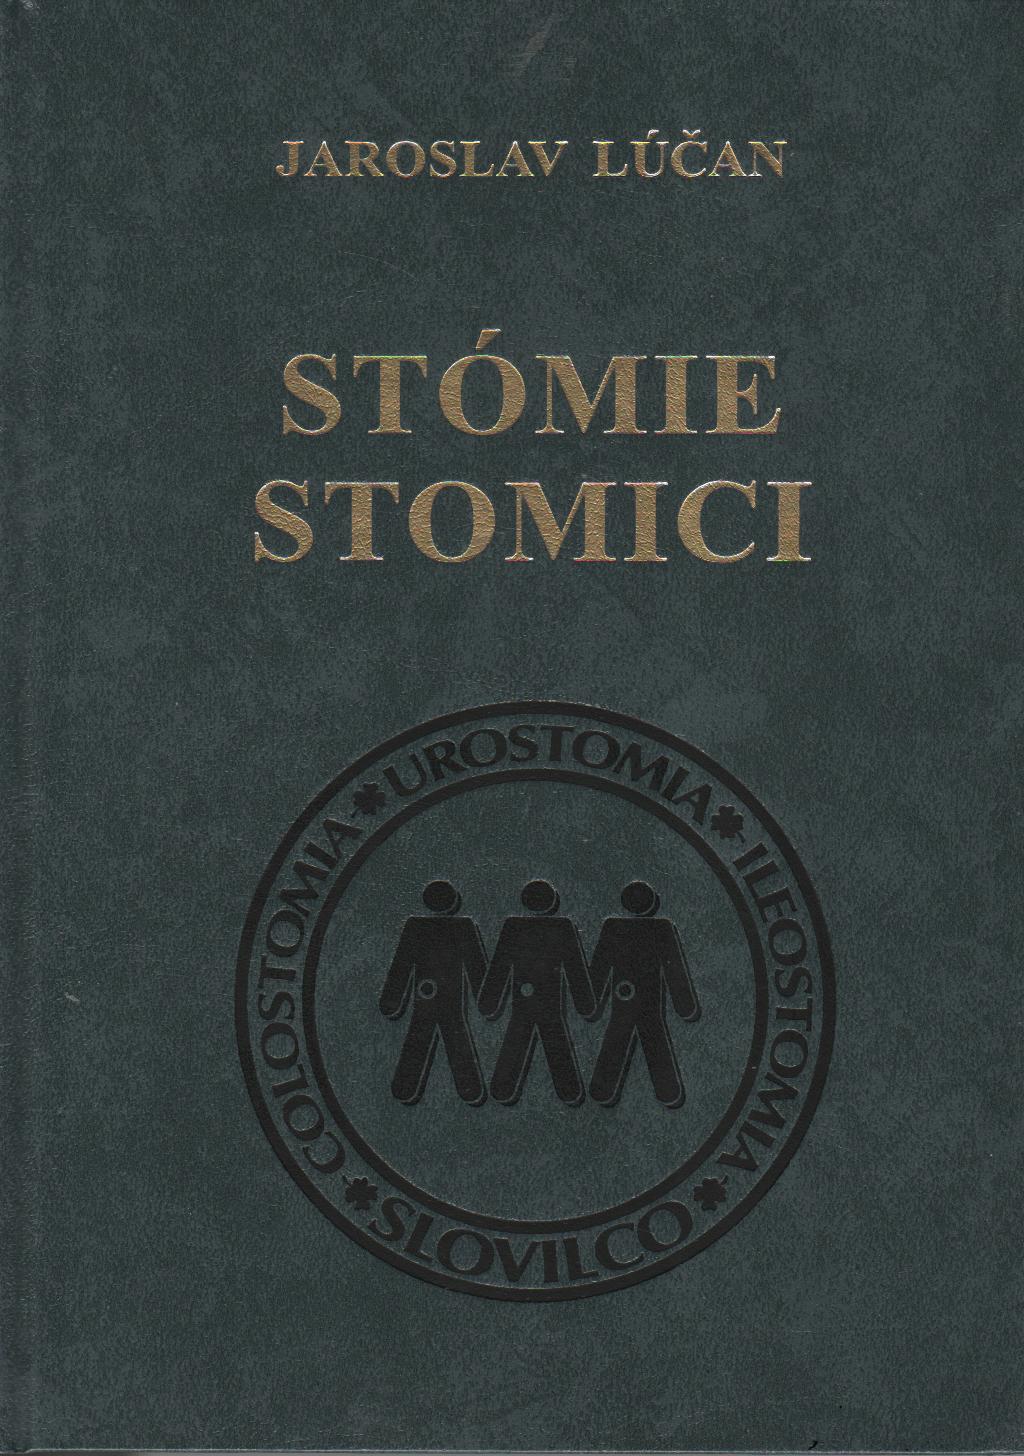 Stómie a stomici  